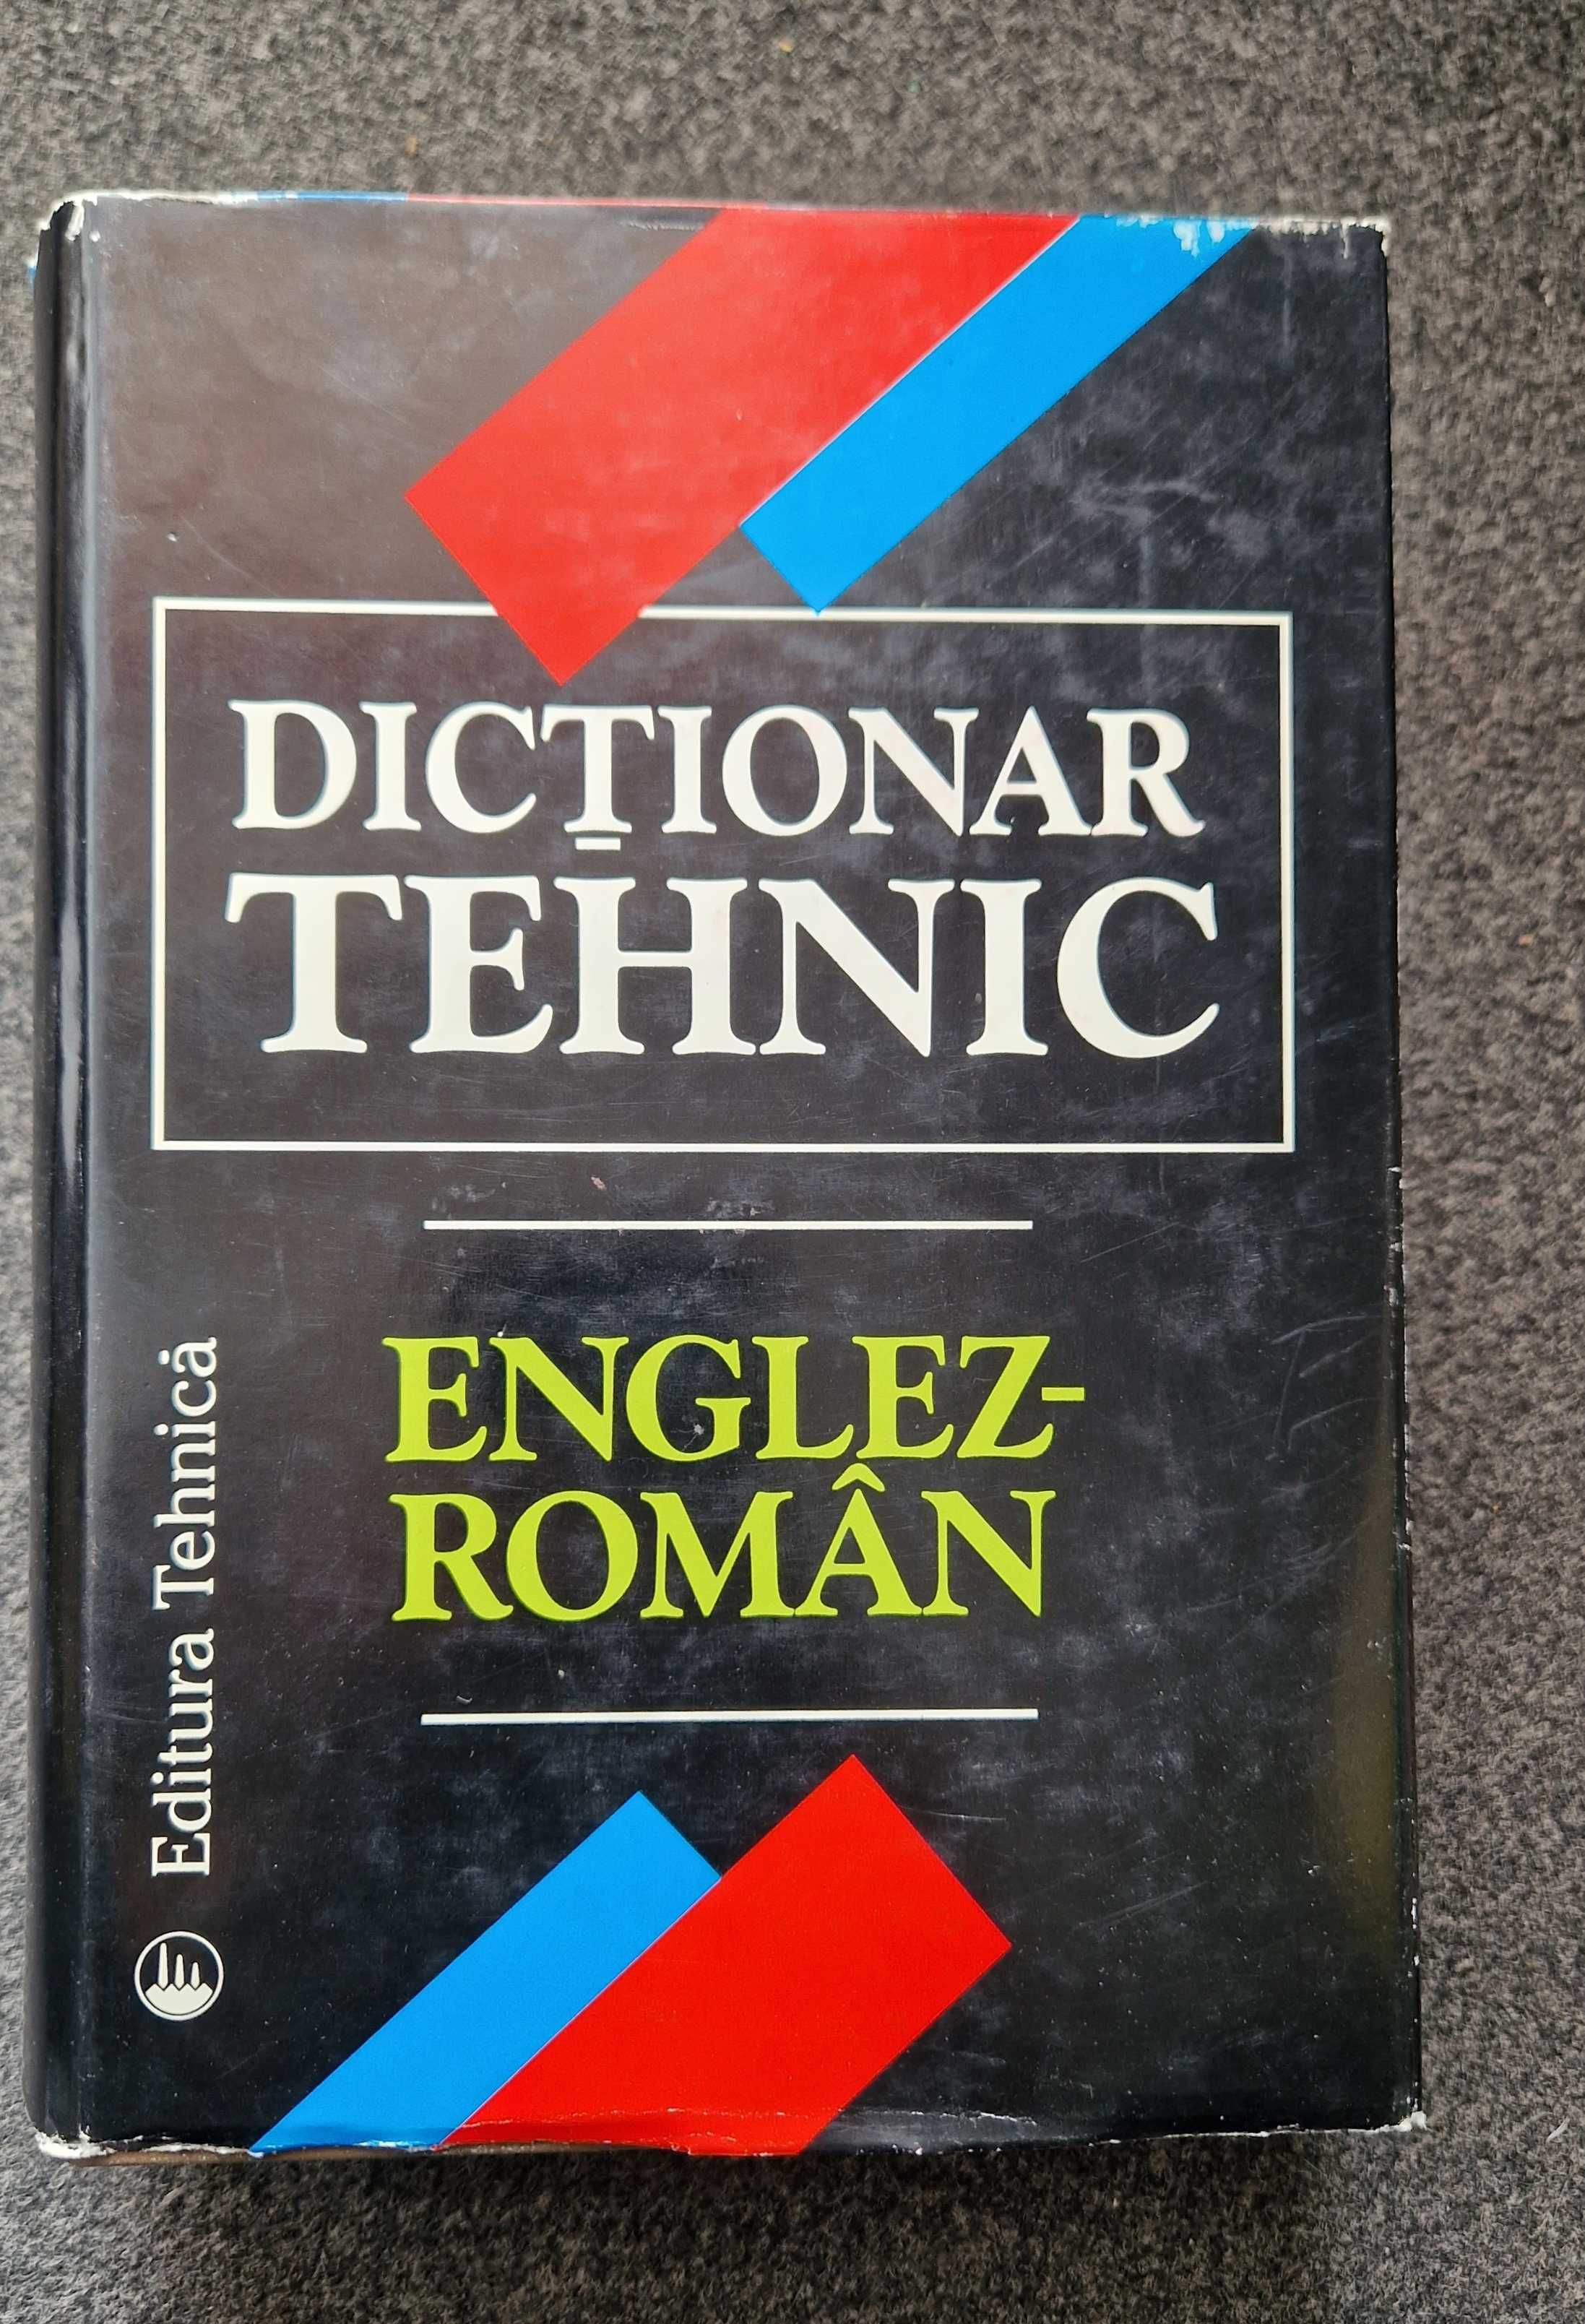 Dictionar Tehnic ENGLEZ-ROMAN 1997